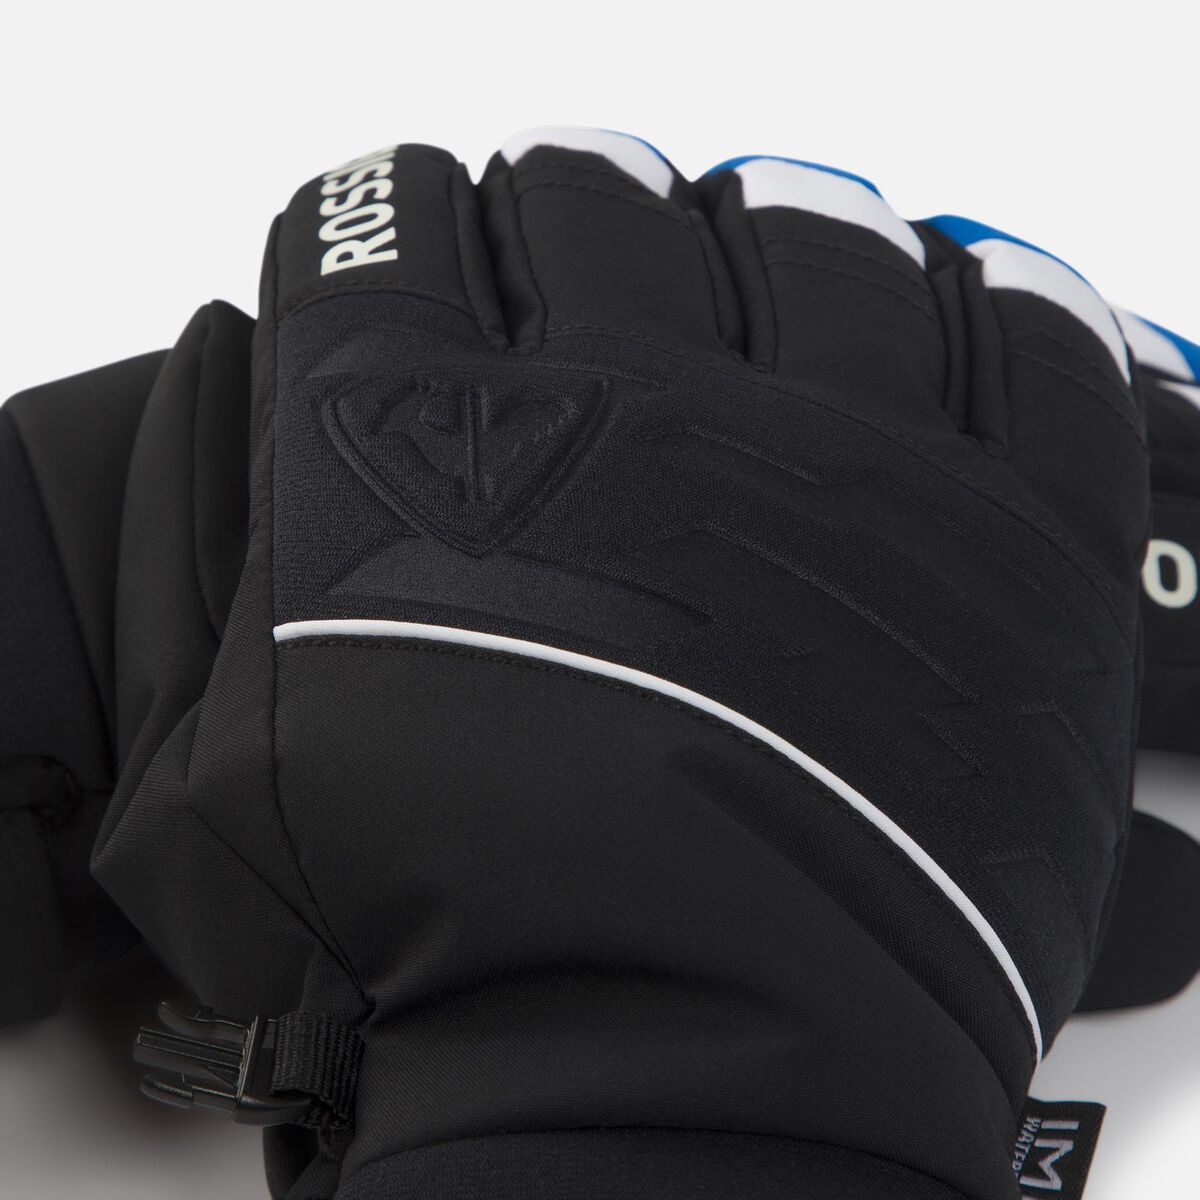 Men's Speed Ski Gloves